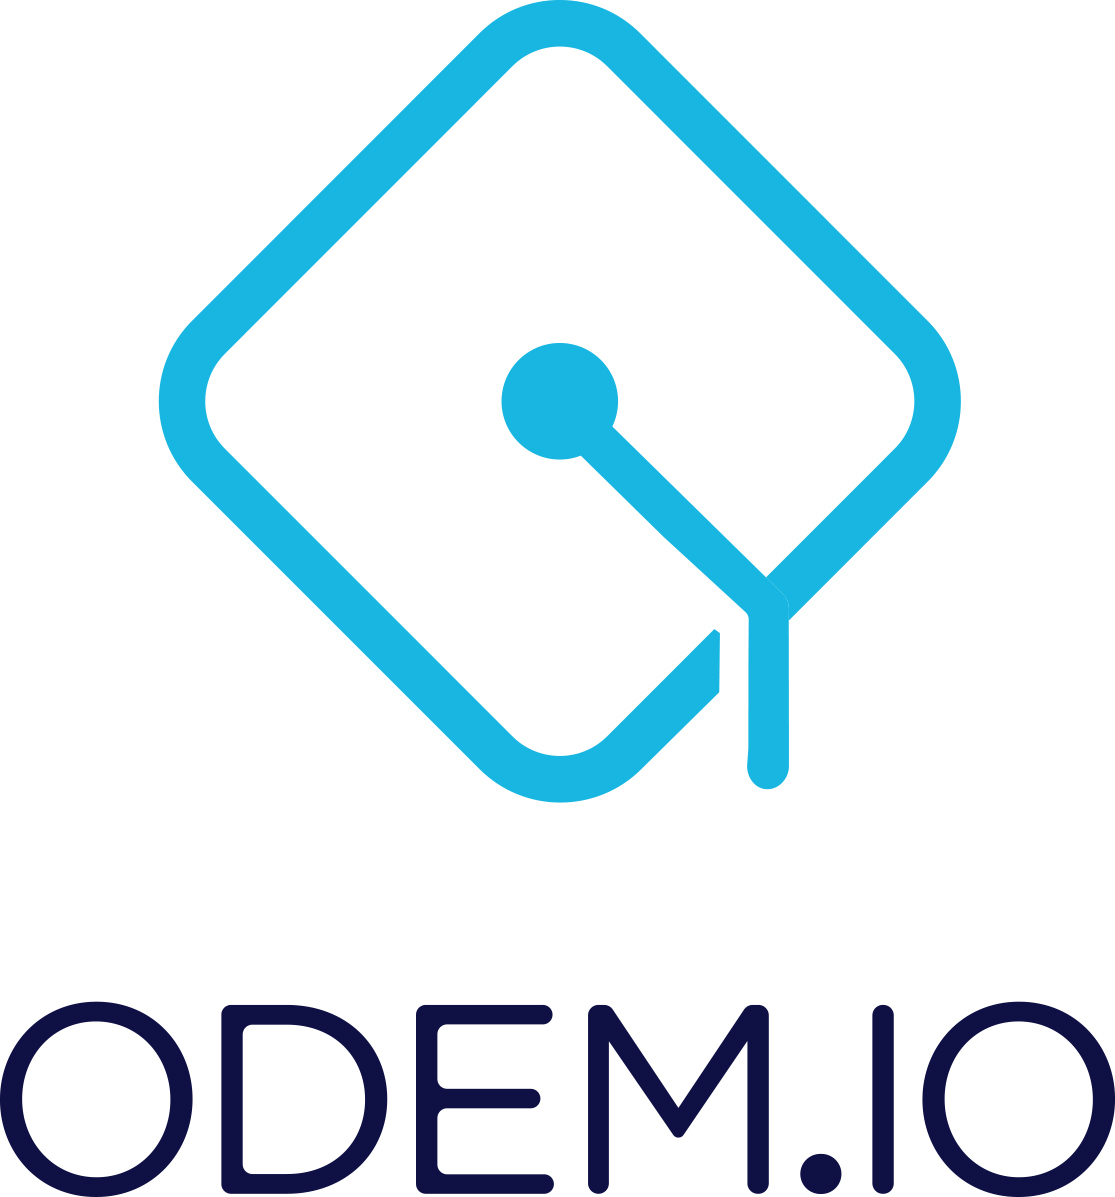 ODEM Tokens Begin Trading on Bitfinex Crypto Exchange